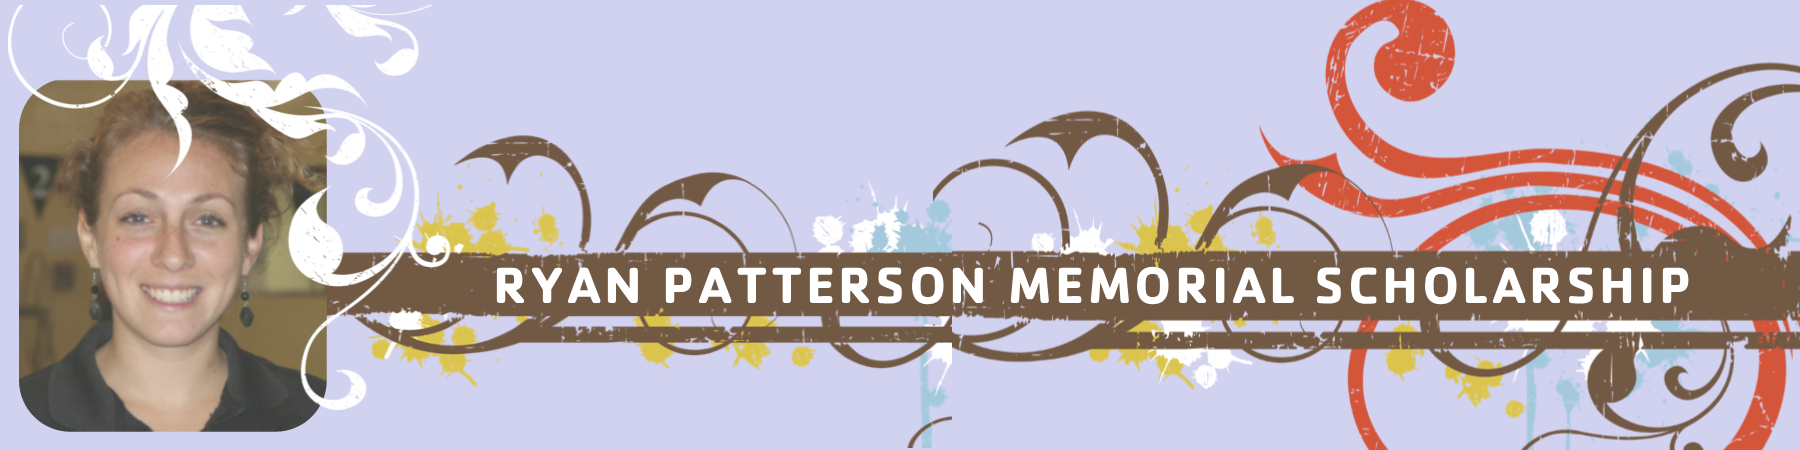 Ryan Patterson Memorial Scholarship homepage banner